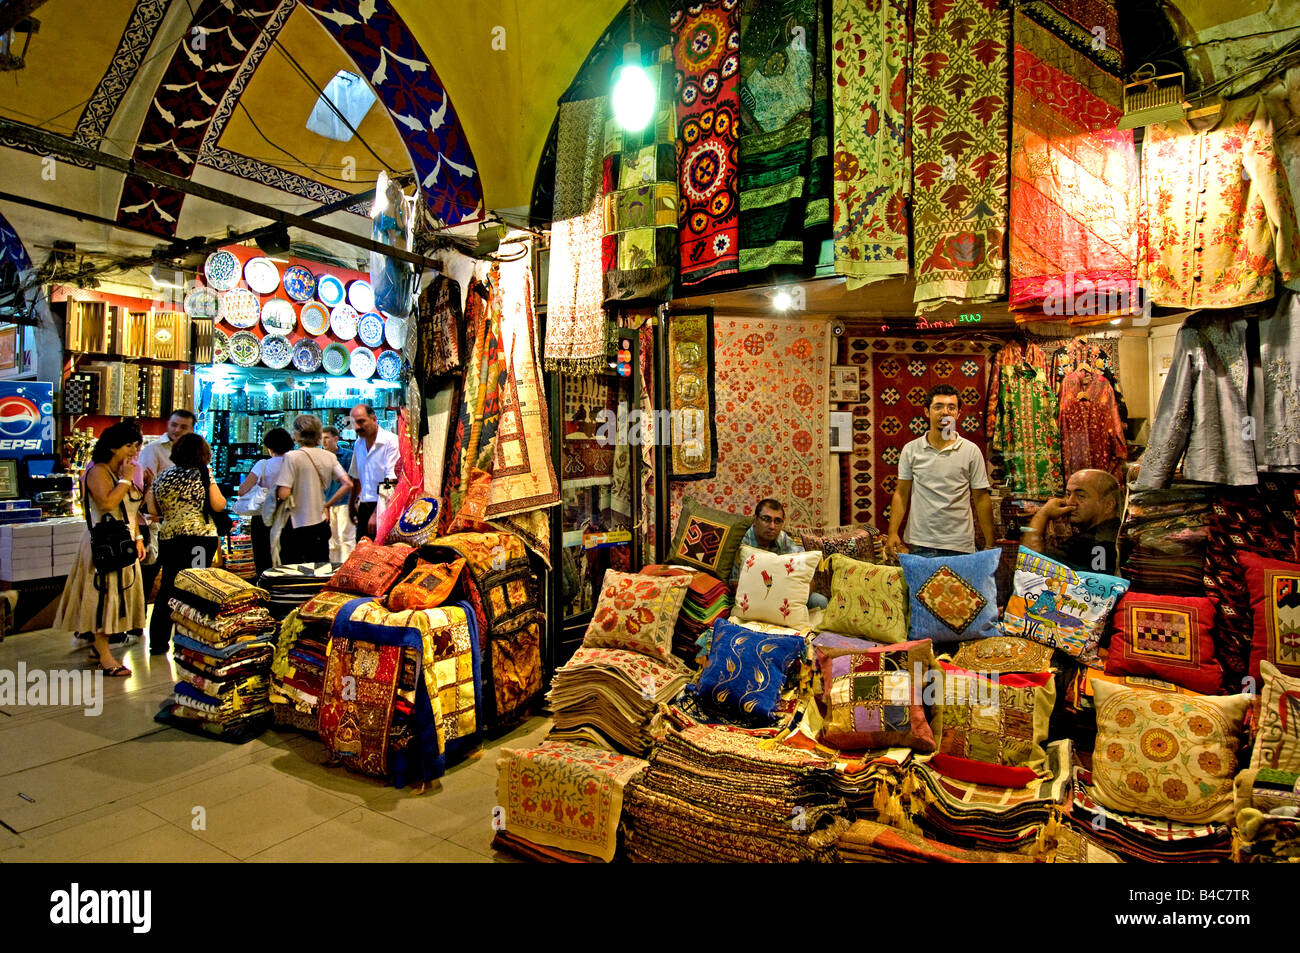 Grand Bazar Kapali Carsi Istanbul Turquie Kapalıcarsı Tapis Tapis Tapis commerce artisanat Banque D'Images